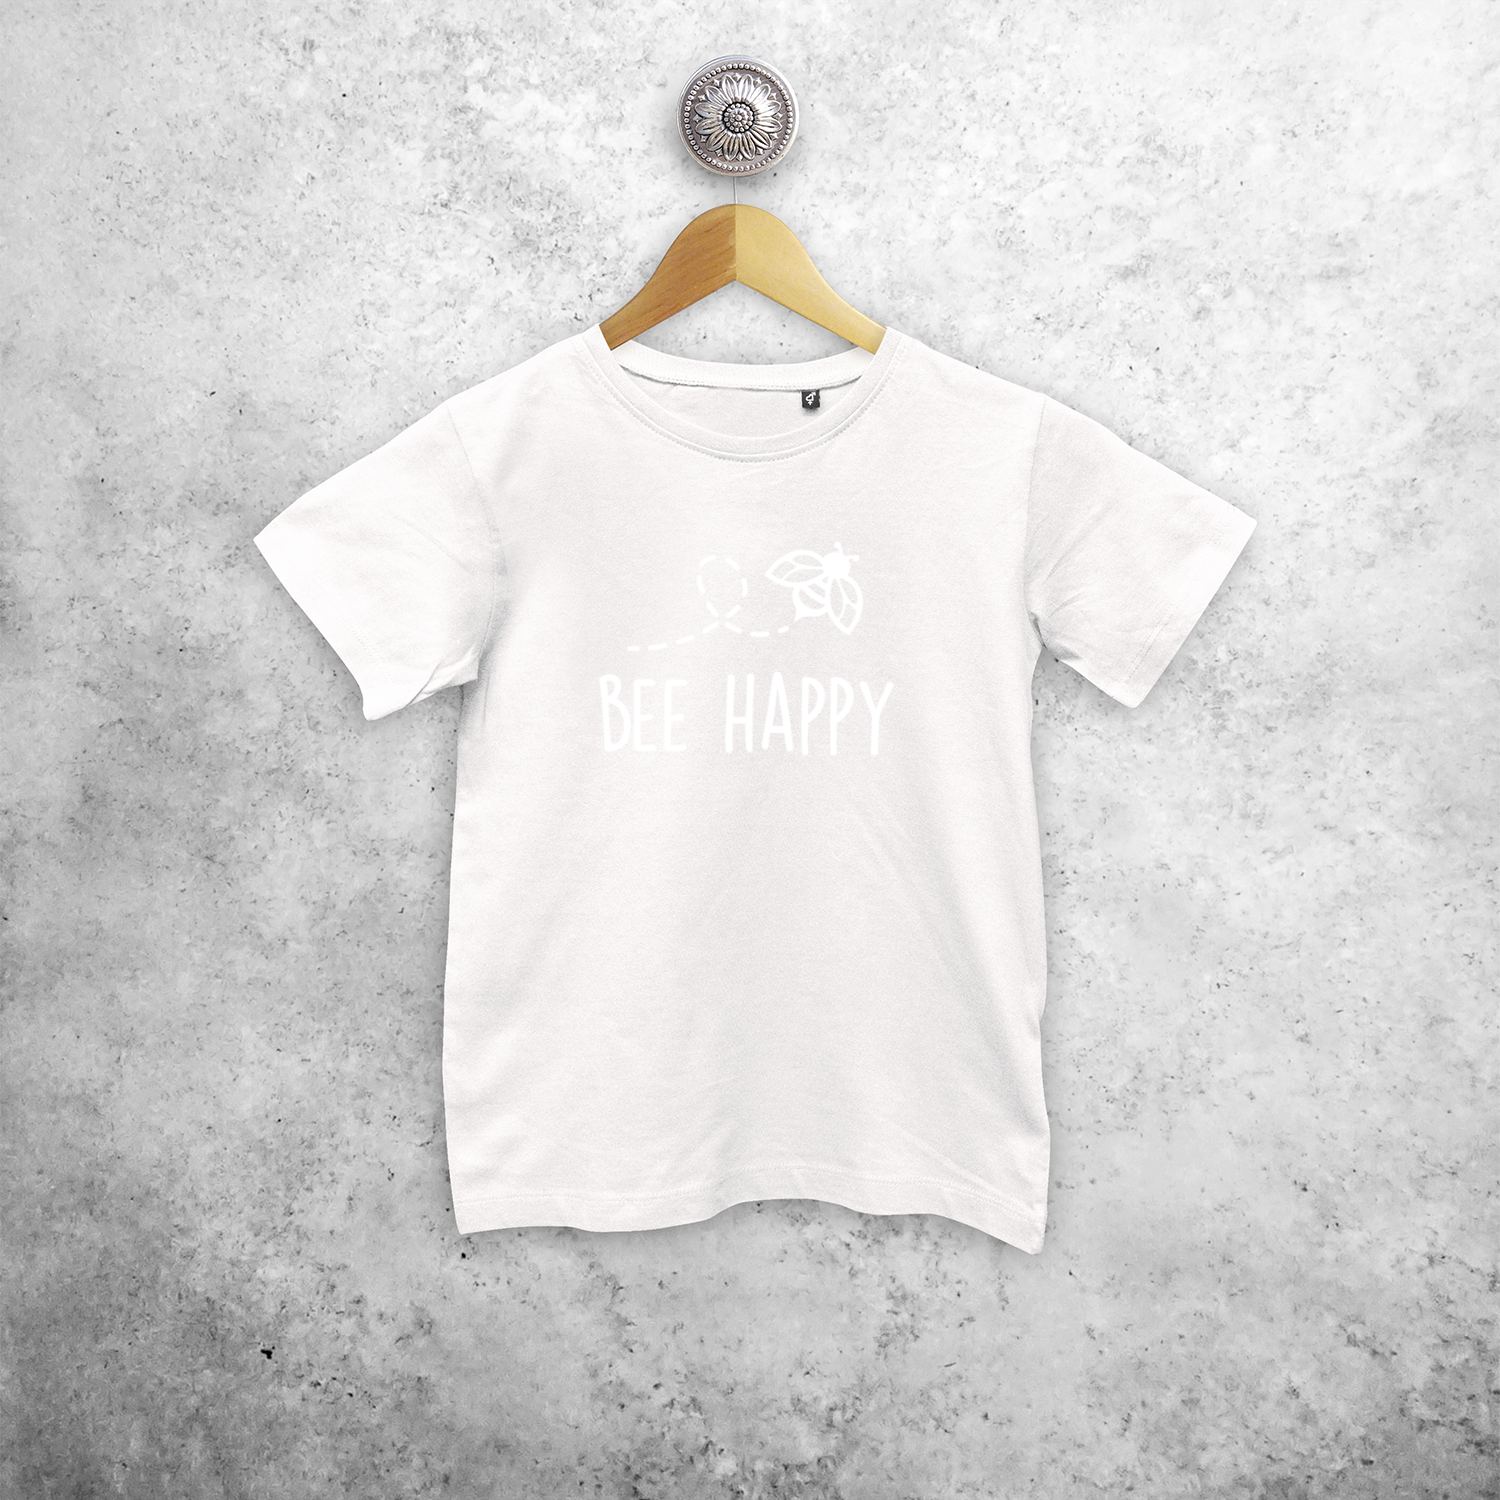 'Bee happy' magic kids shortsleeve shirt